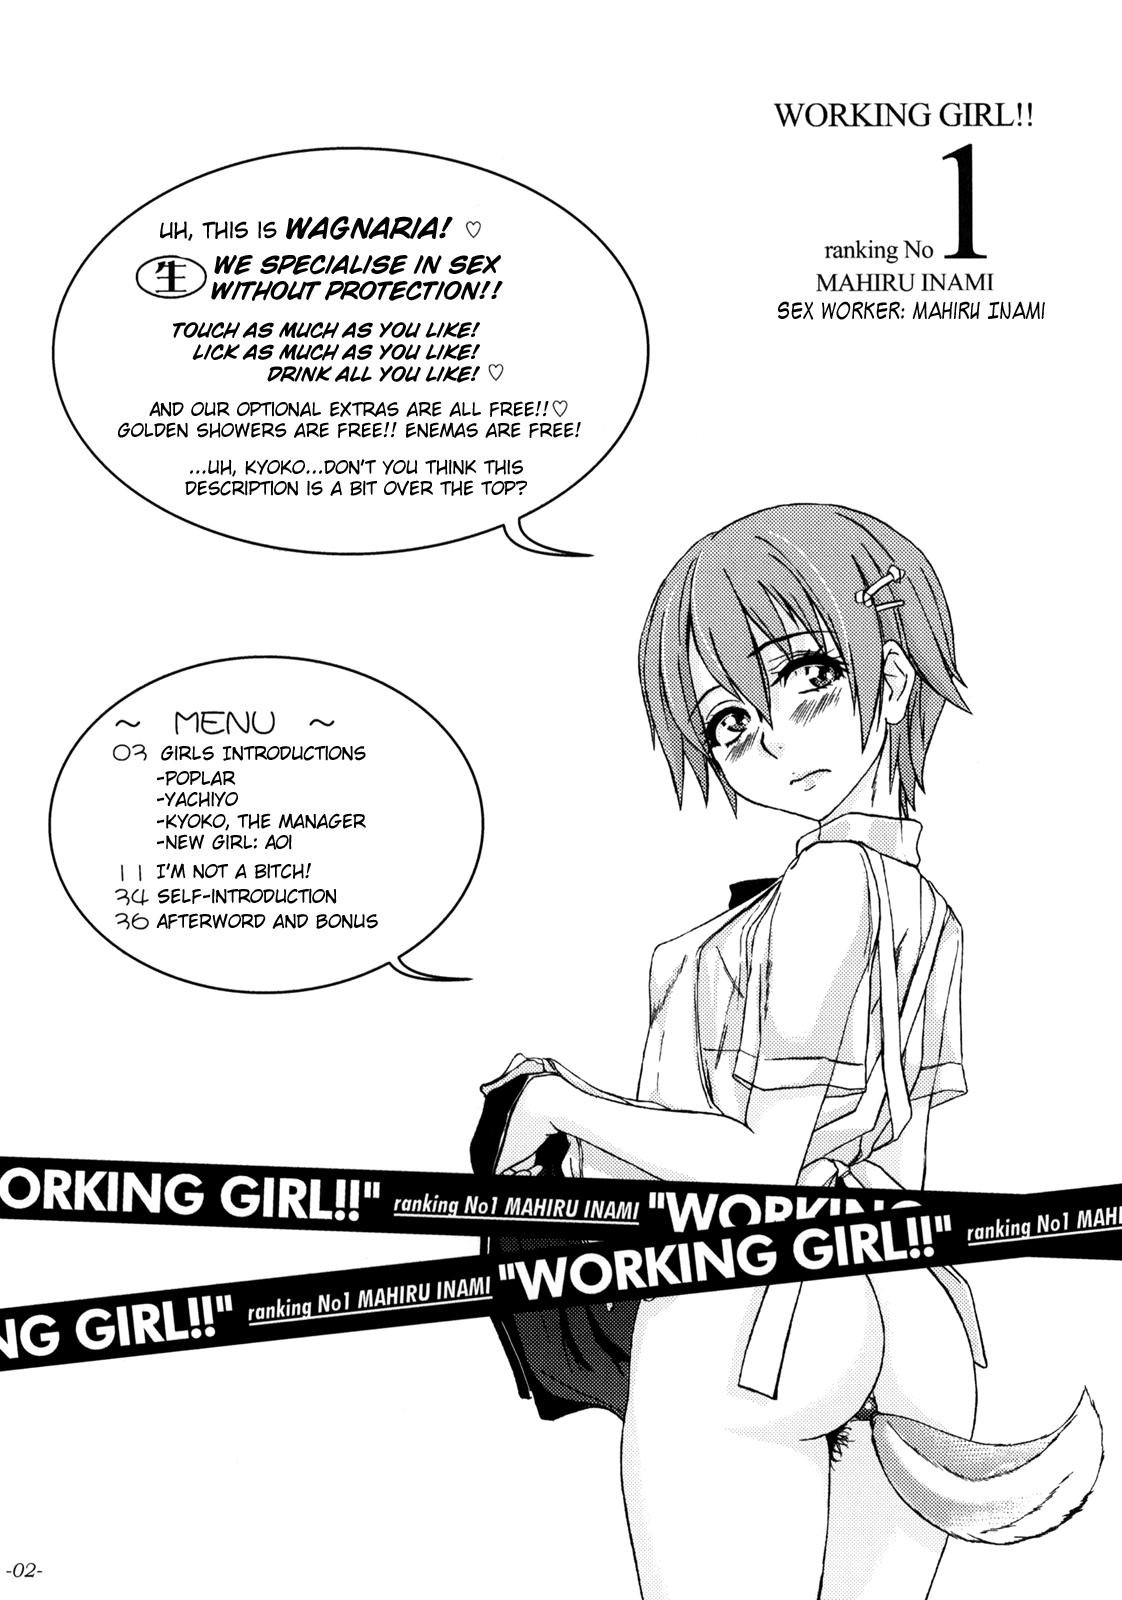 WORKING GIRL!! ranking No 1 Fuuzokujou Inami Mahiru 2